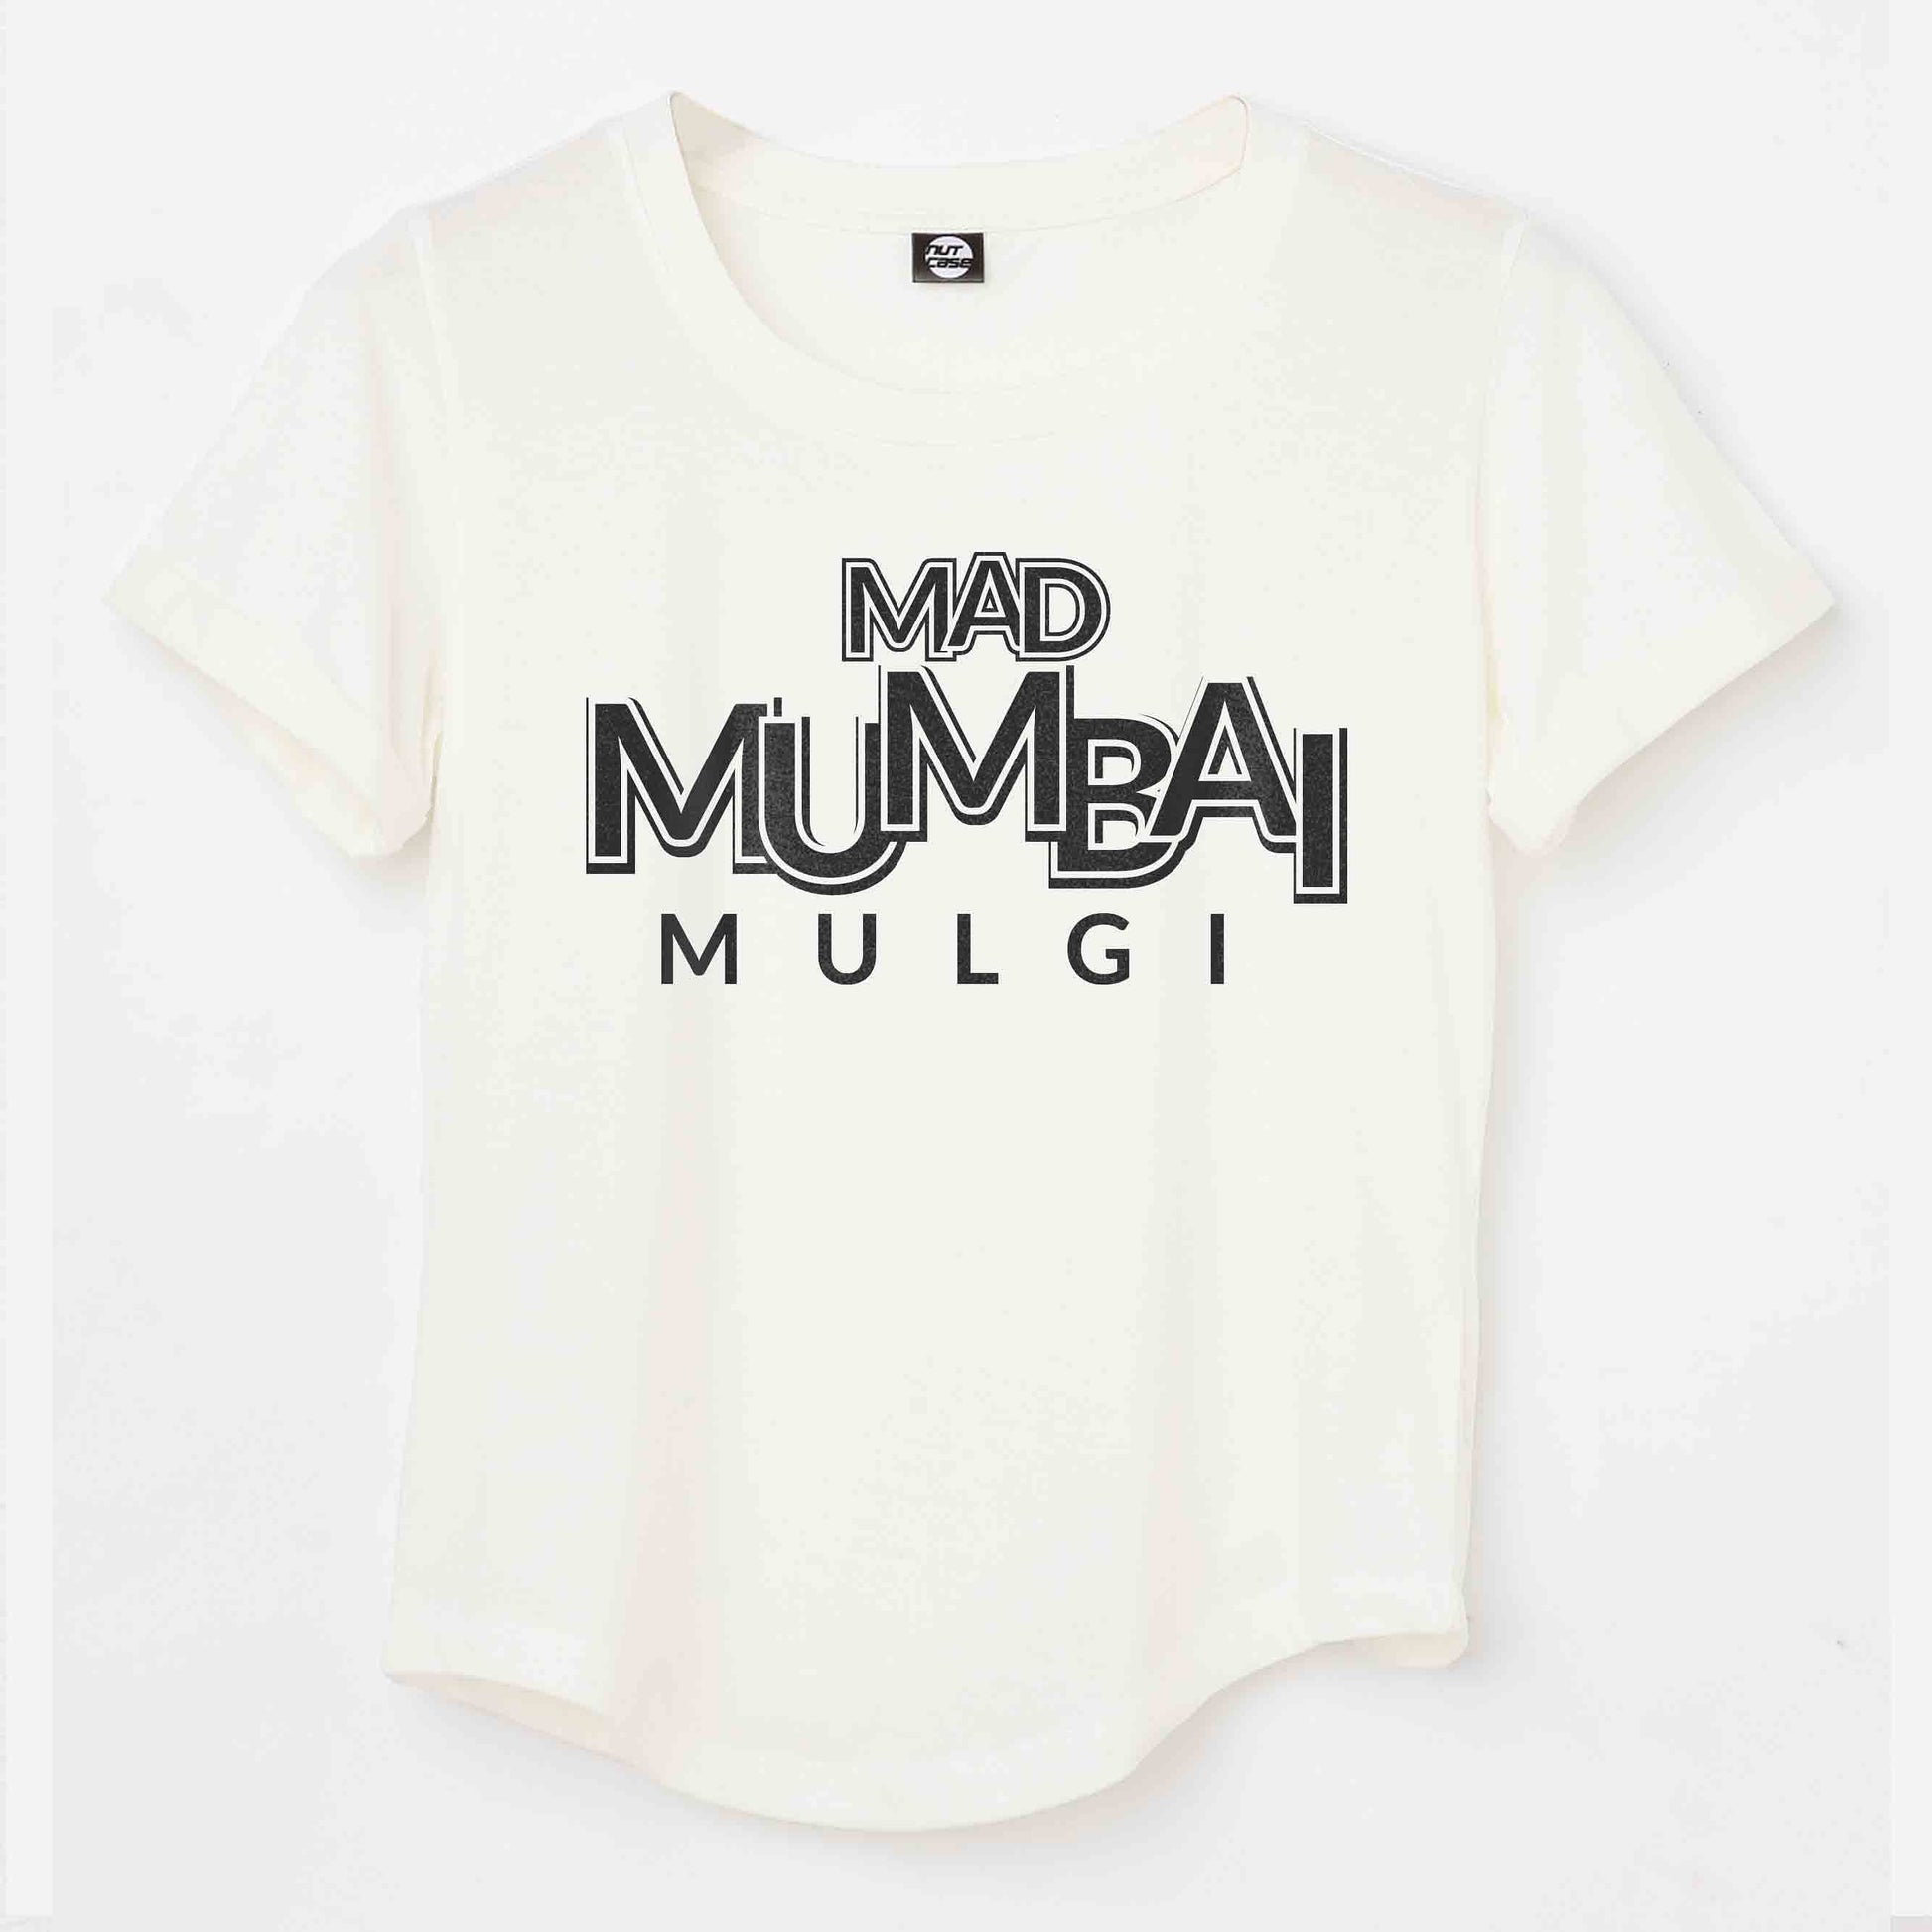 Nutcase Mumbai Up Down Tshirts For Girls - Mad  Mulgi Nutcase